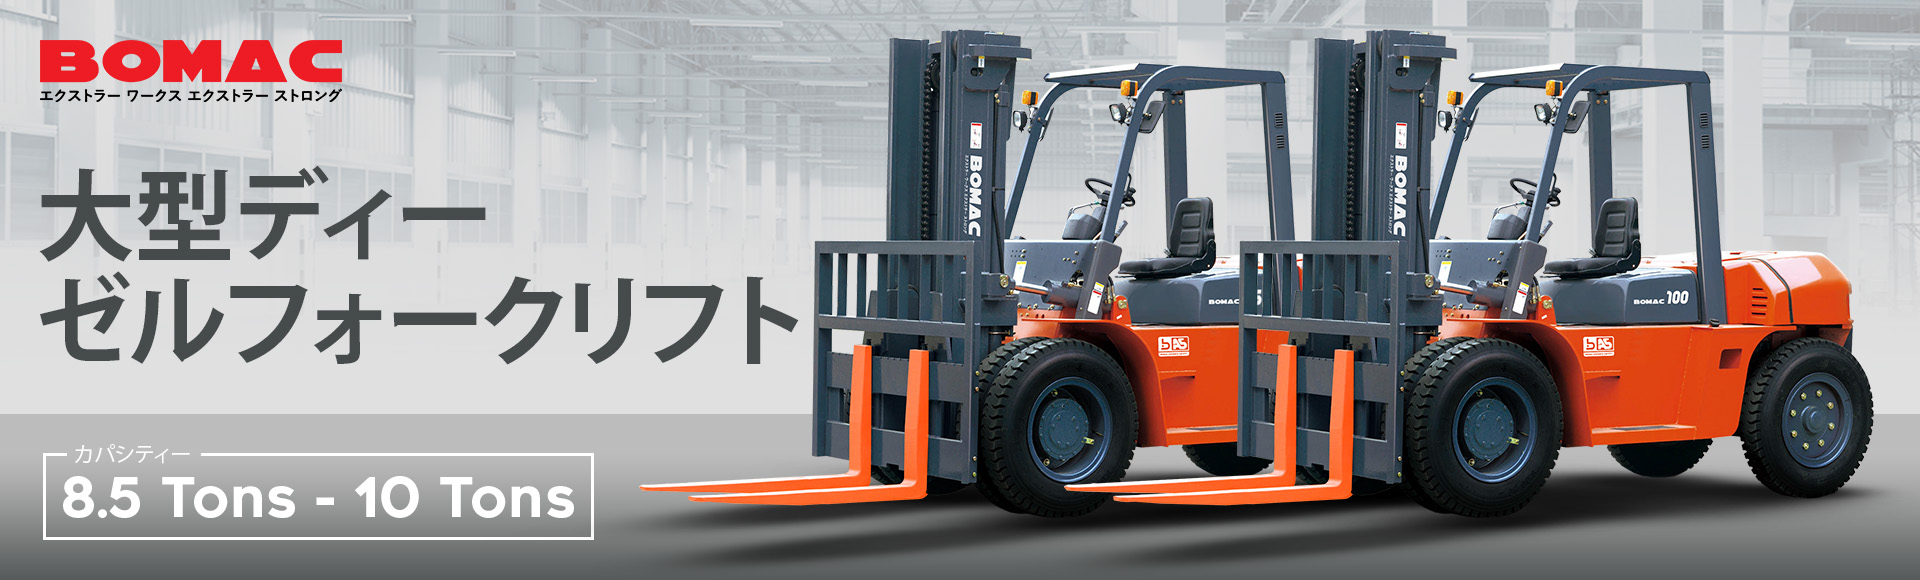 Banner Bomac Forklift Japan 8.5 TON - 10 TON Japan Ver 1